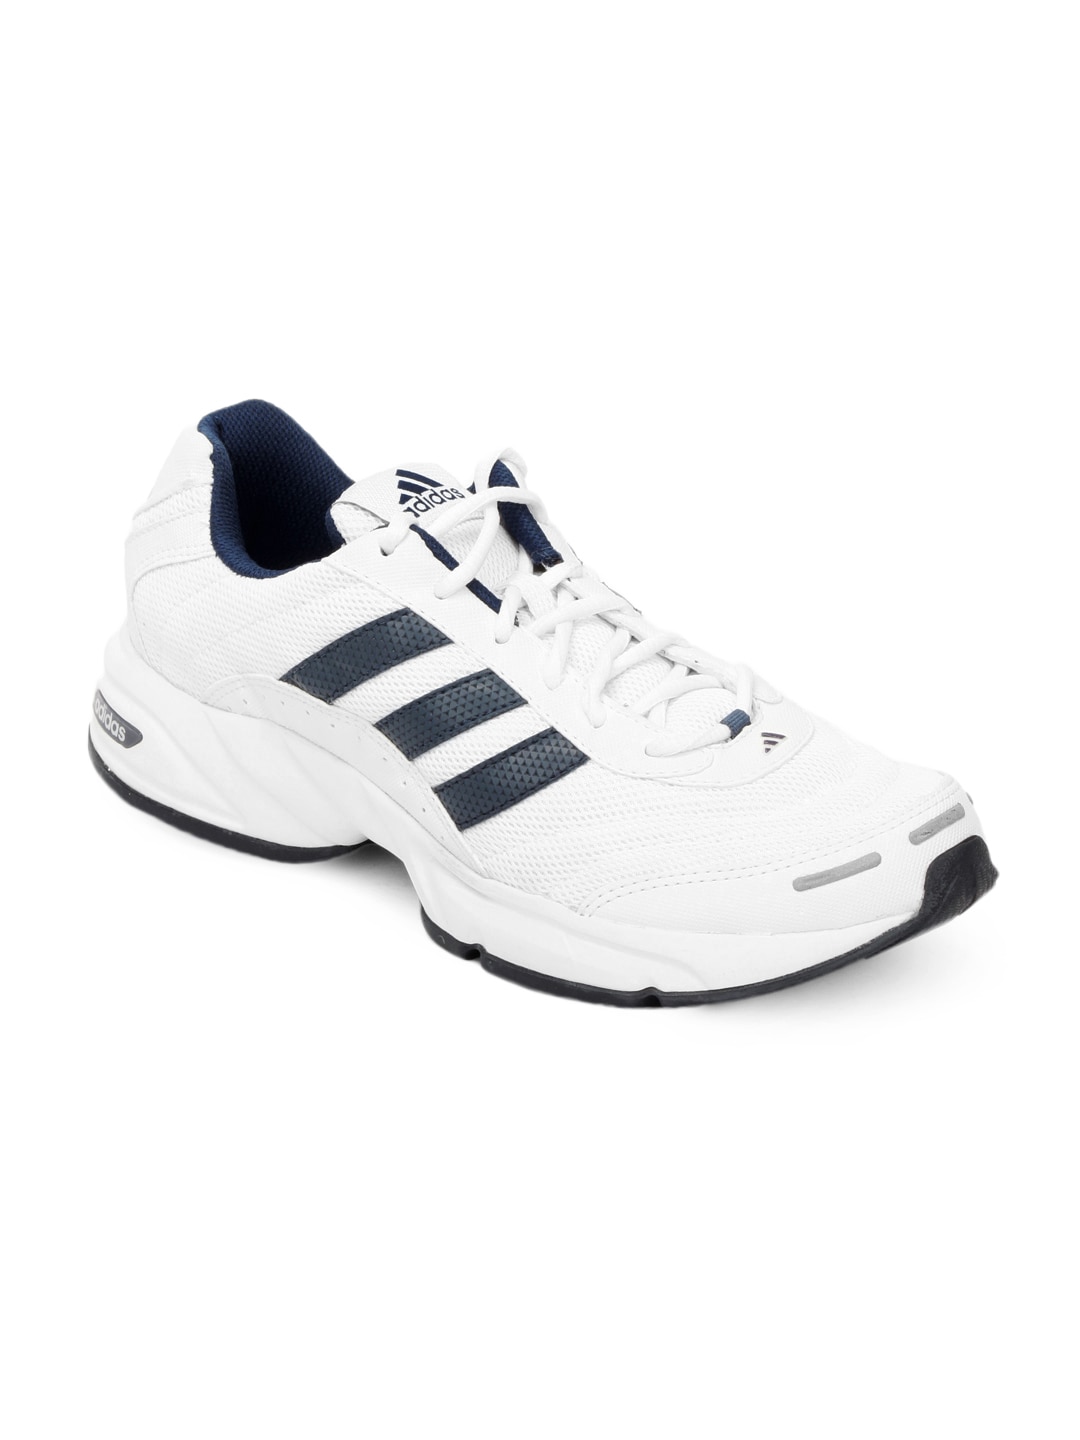 ADIDAS Men Mars White Sports Shoes